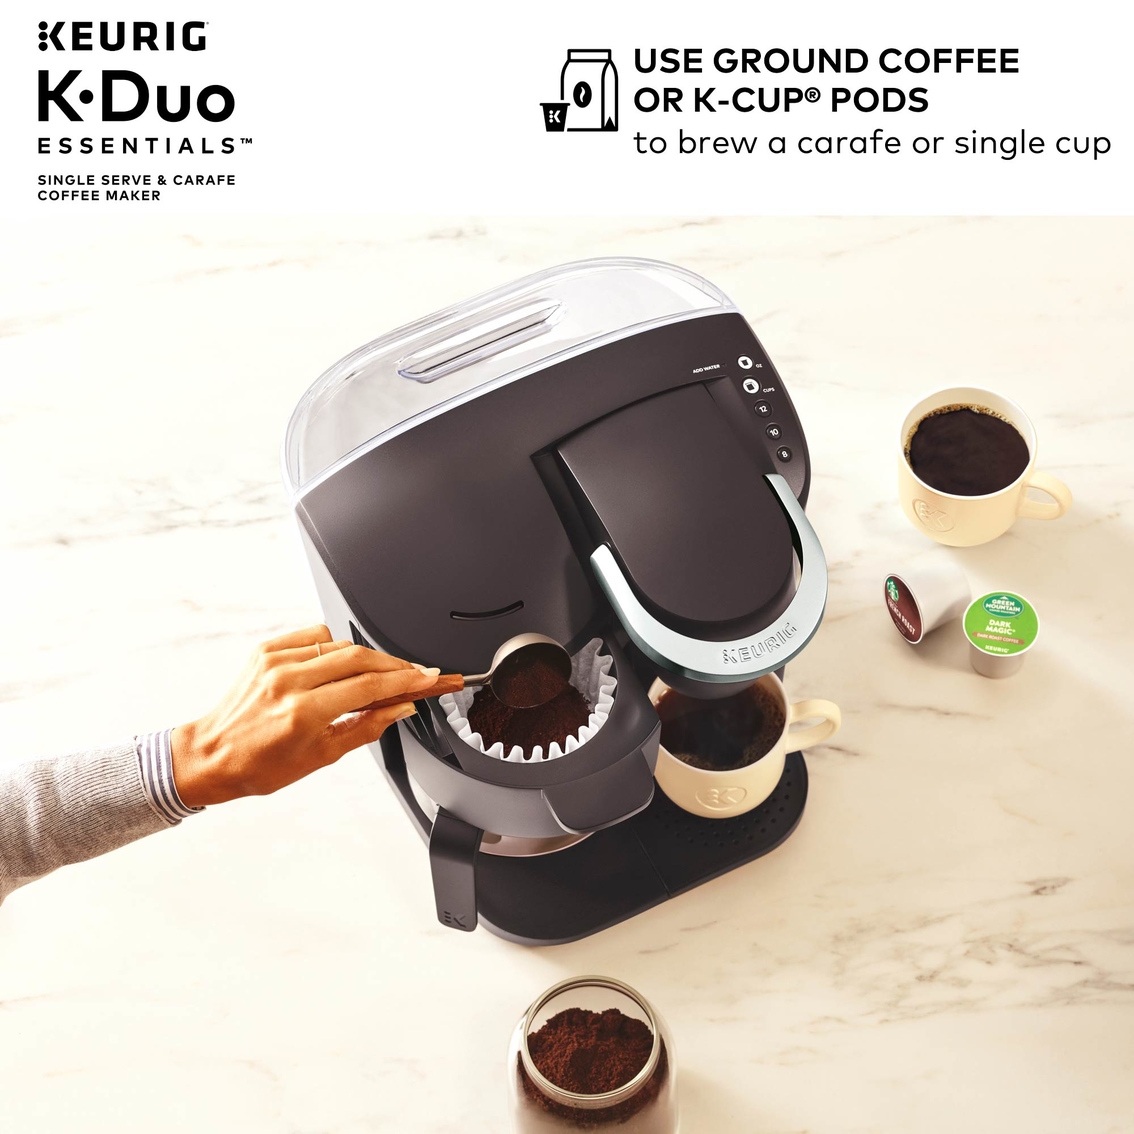 Keurig K-Duo Single Serve and Carafe Coffee Maker - Image 2 of 3